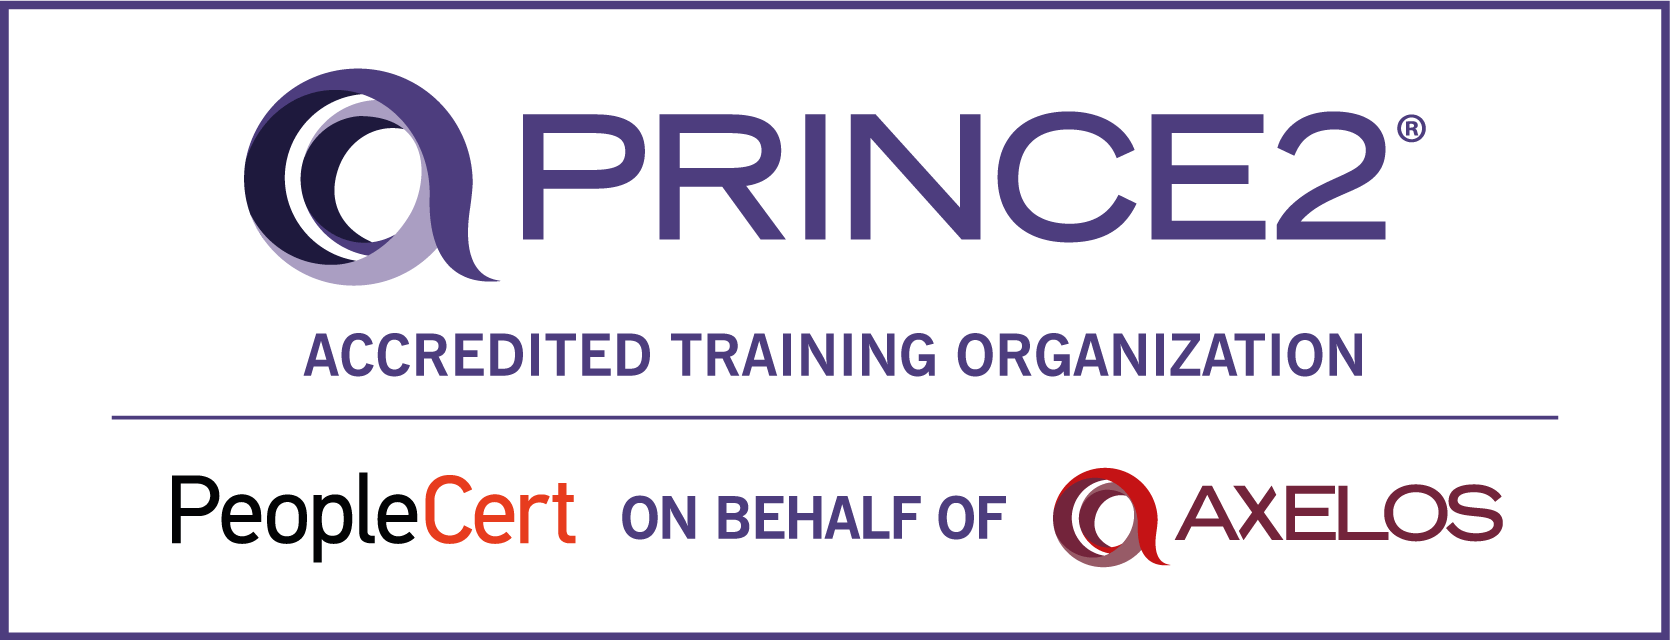 PRINCE2®  logo